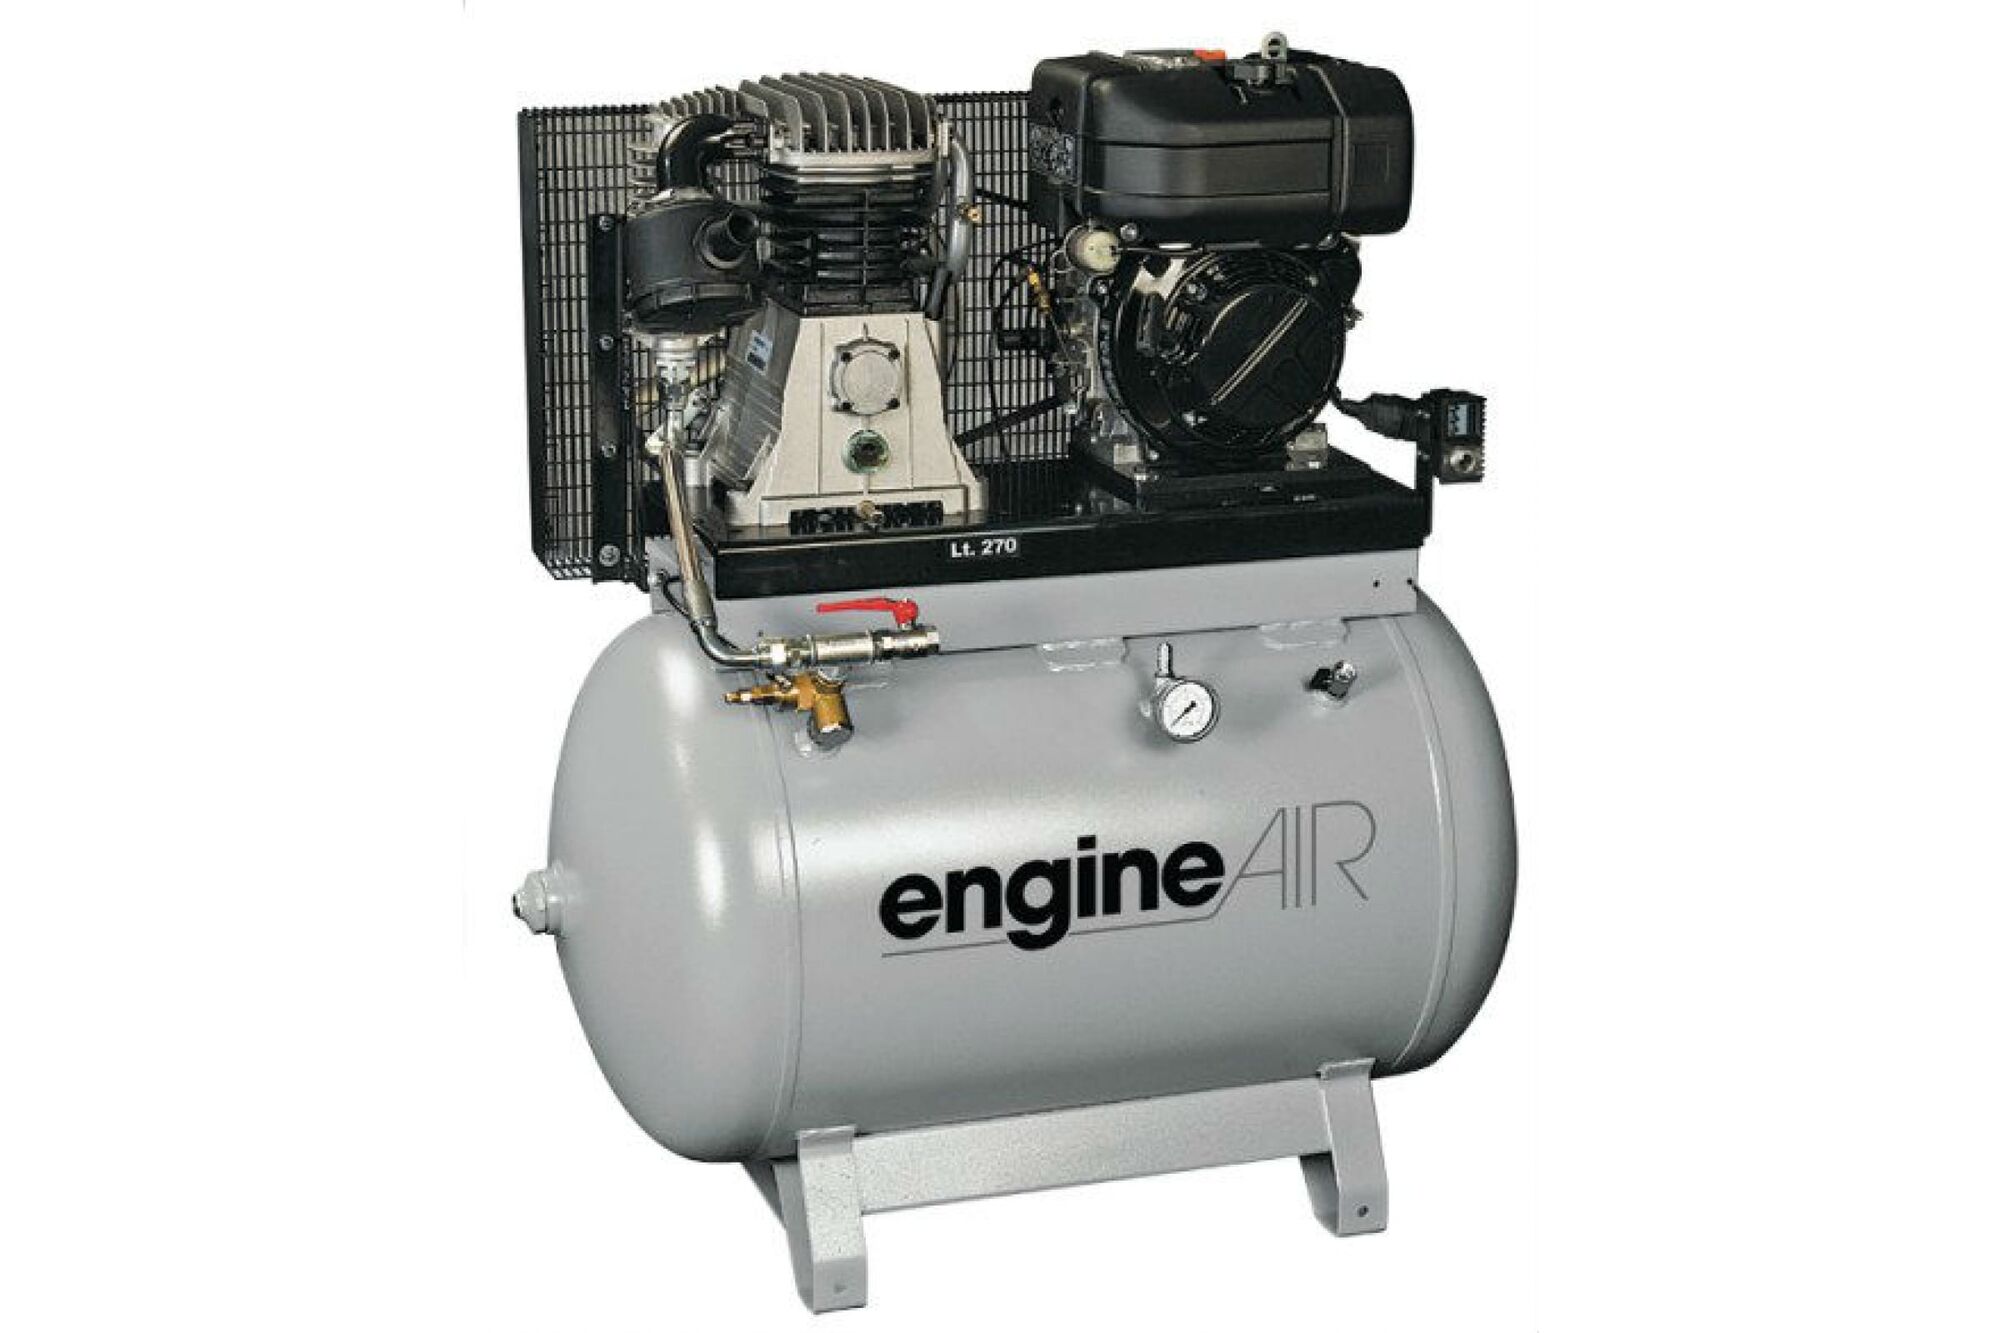 Компрессор ABAC EngineAIR B7000/270 11HP 990 л/мин 270 л 14бар 8.2 кВт стационарный дизель 4116002070 (4116022694)